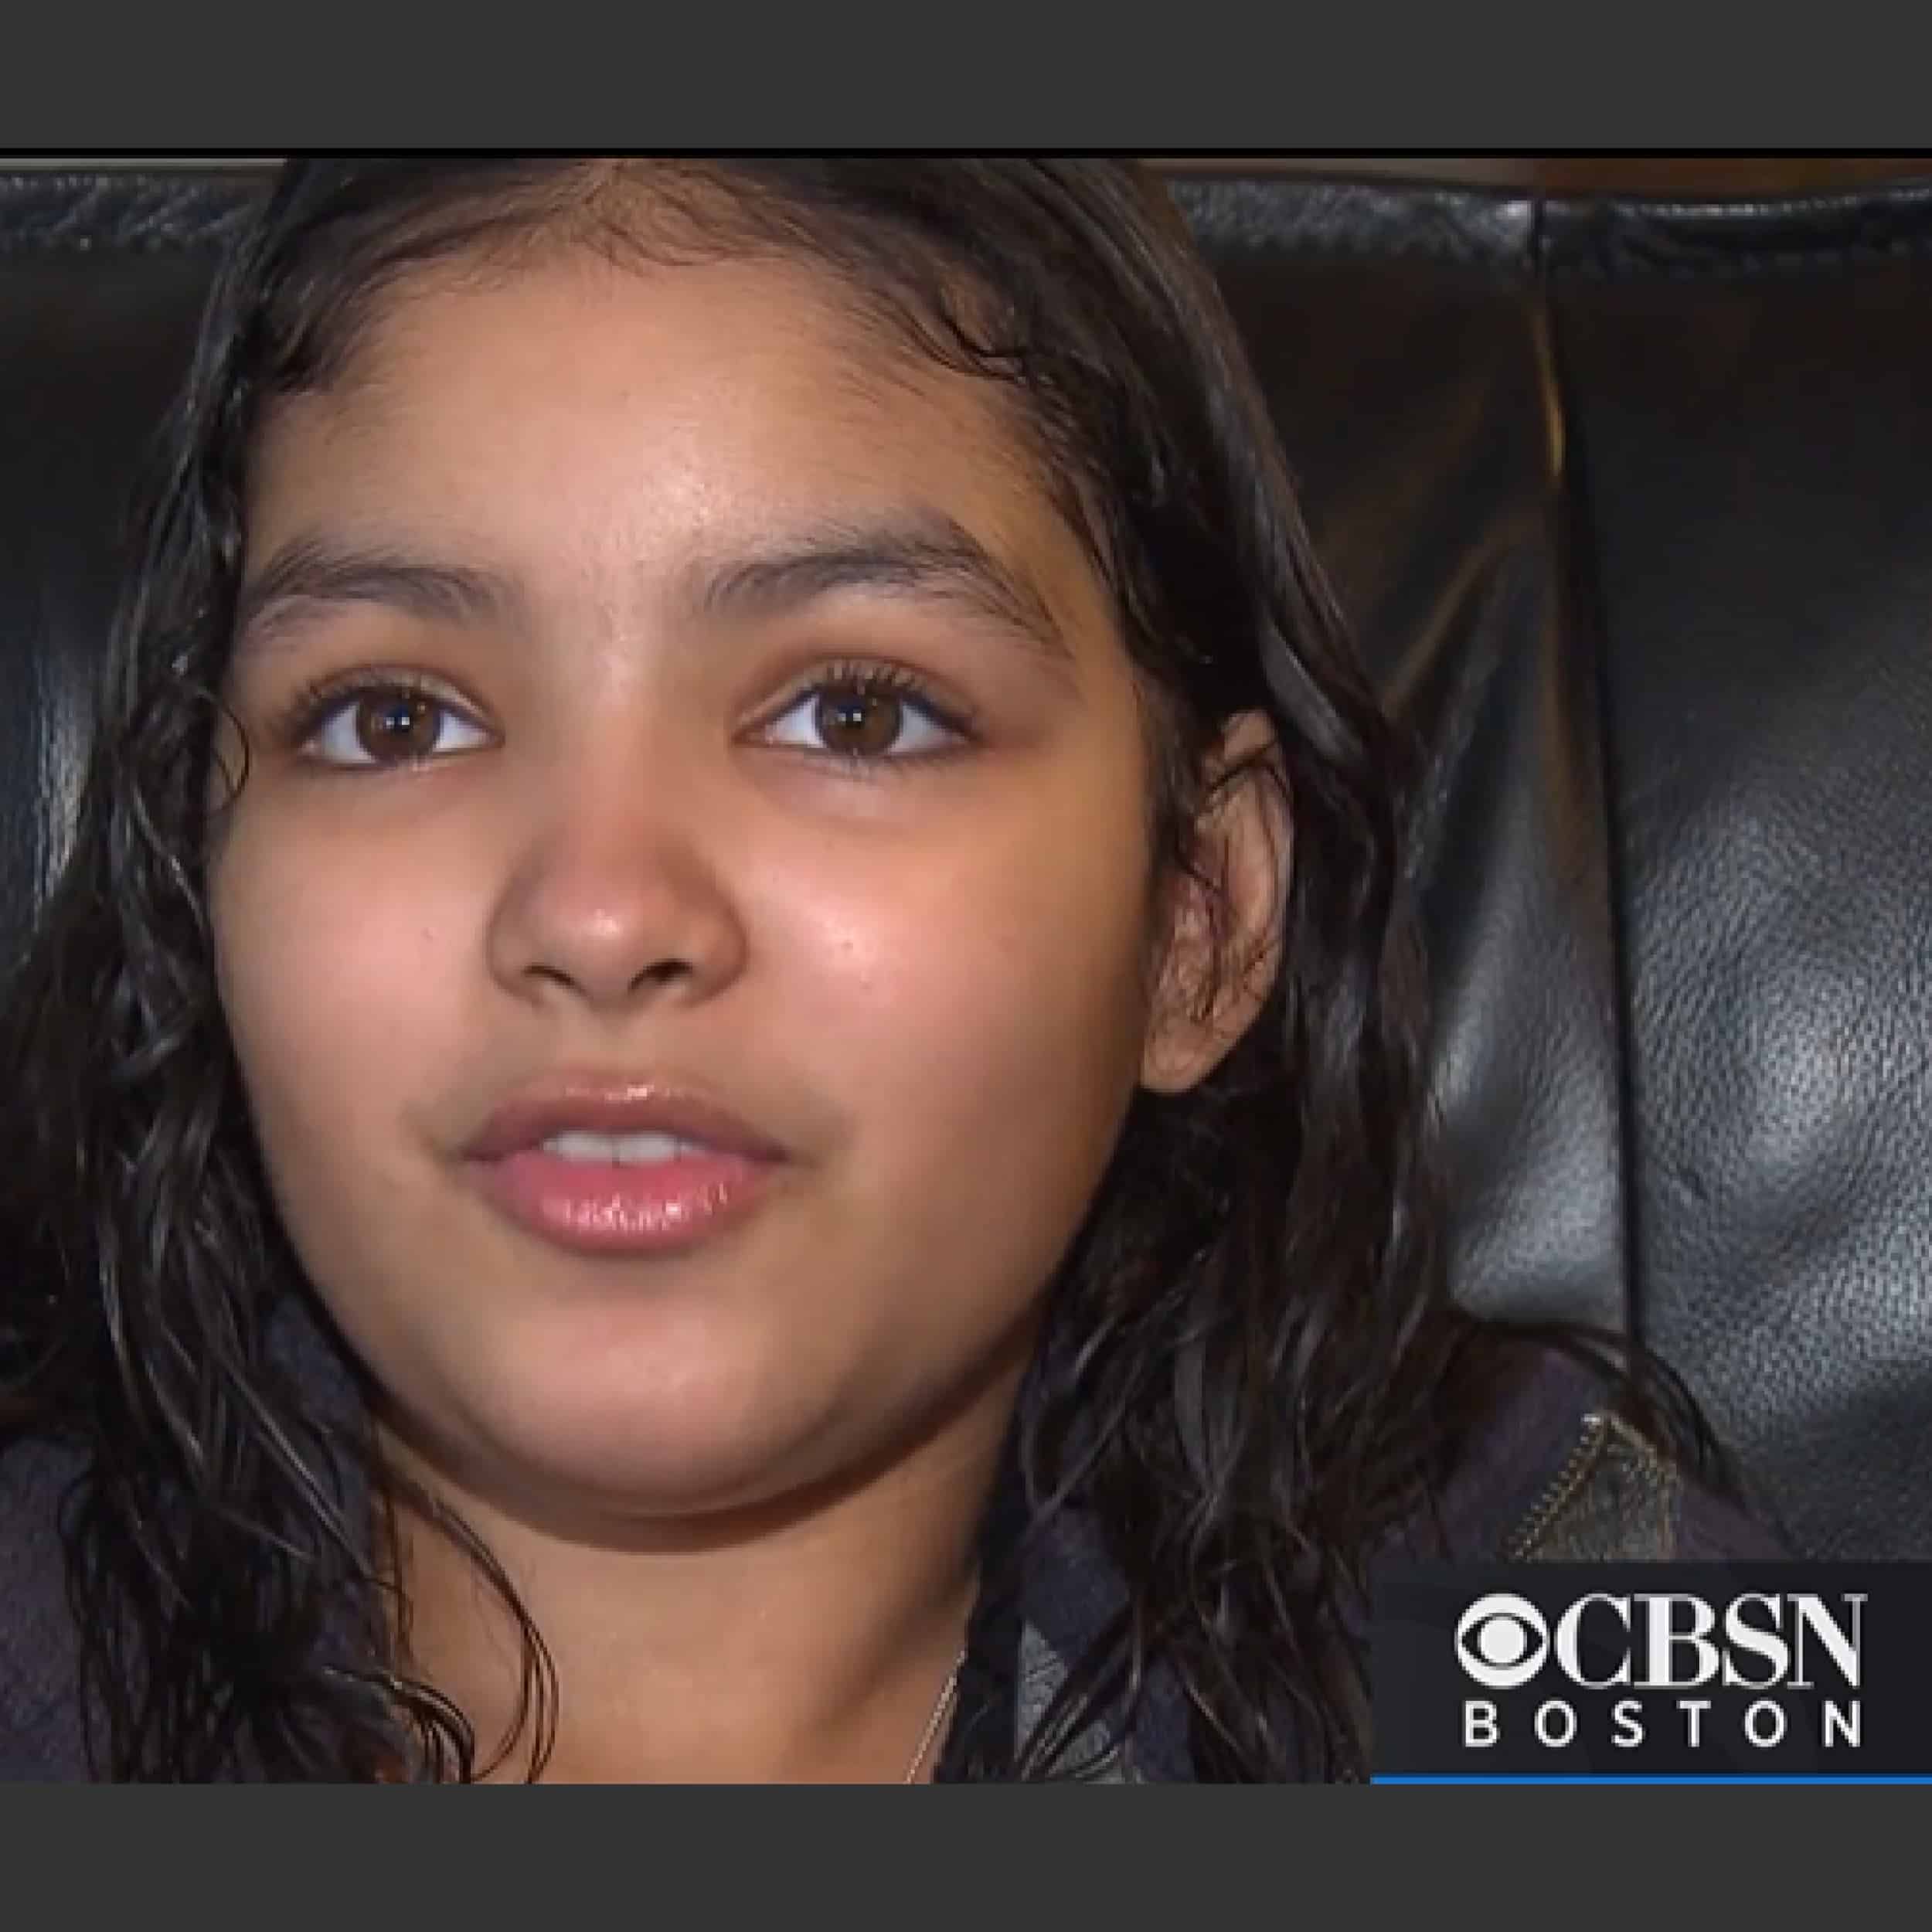 a young girls on CBSN Boston